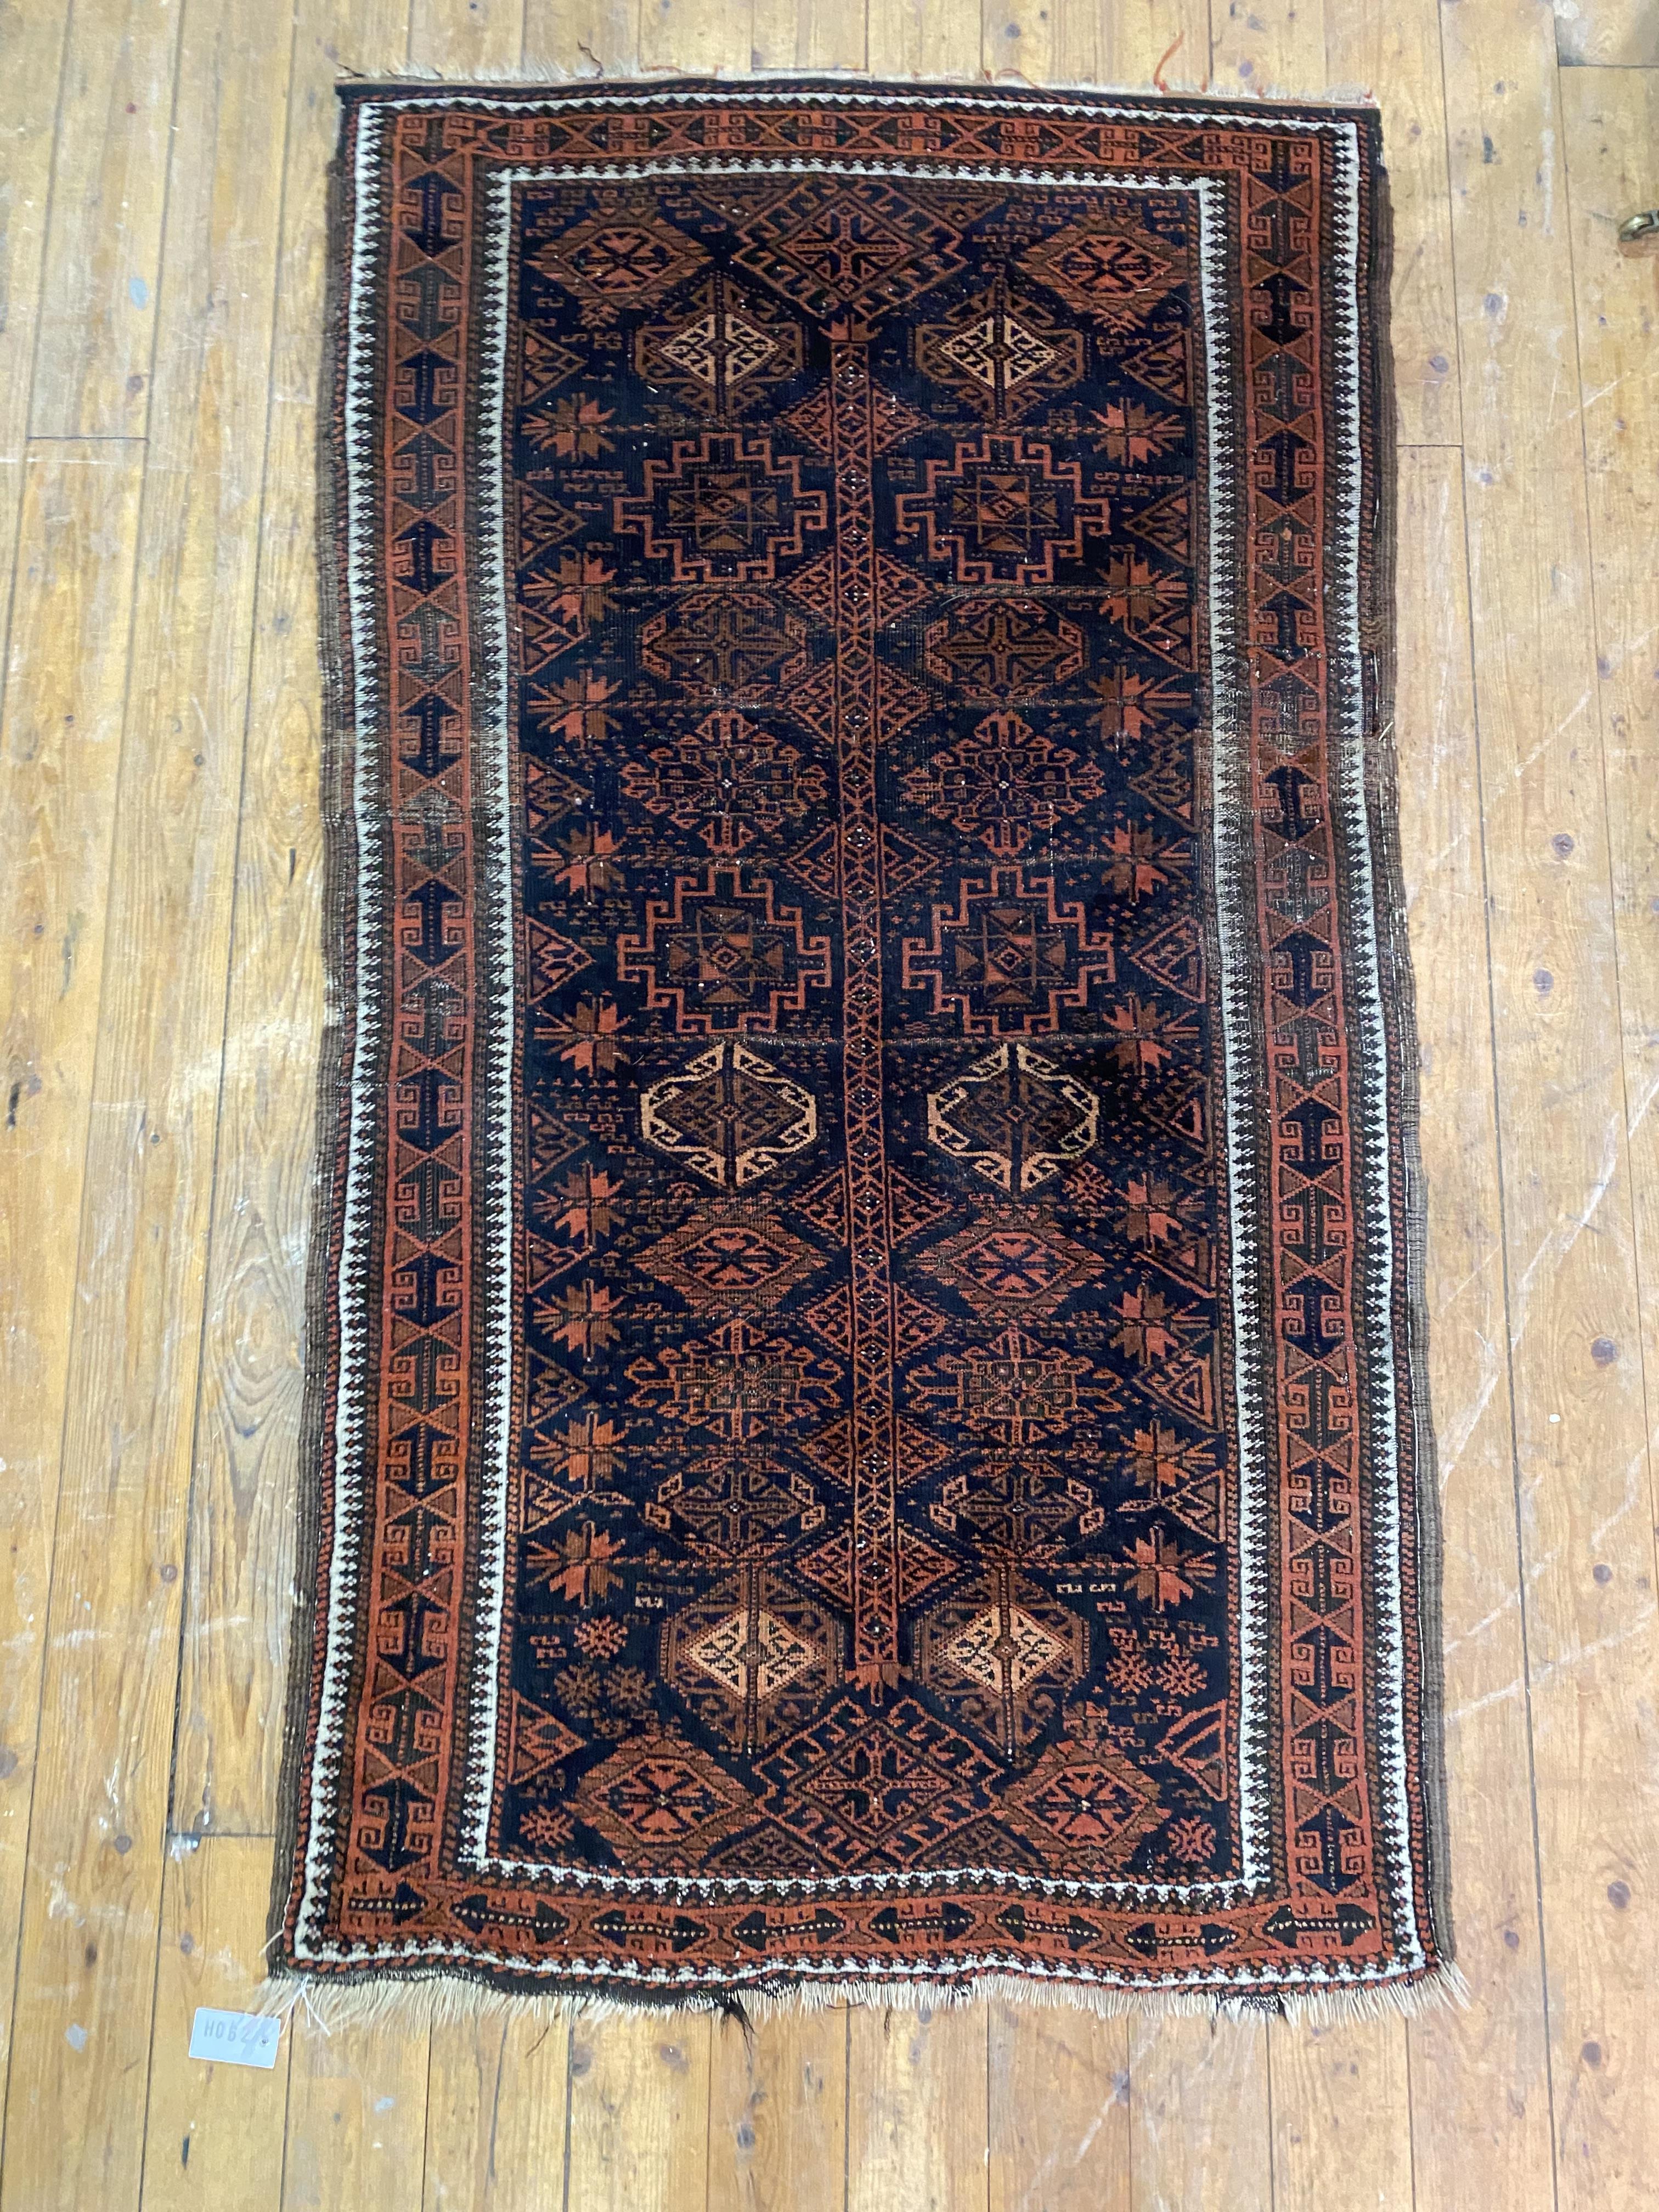 A 19th century Persian Baluch rug